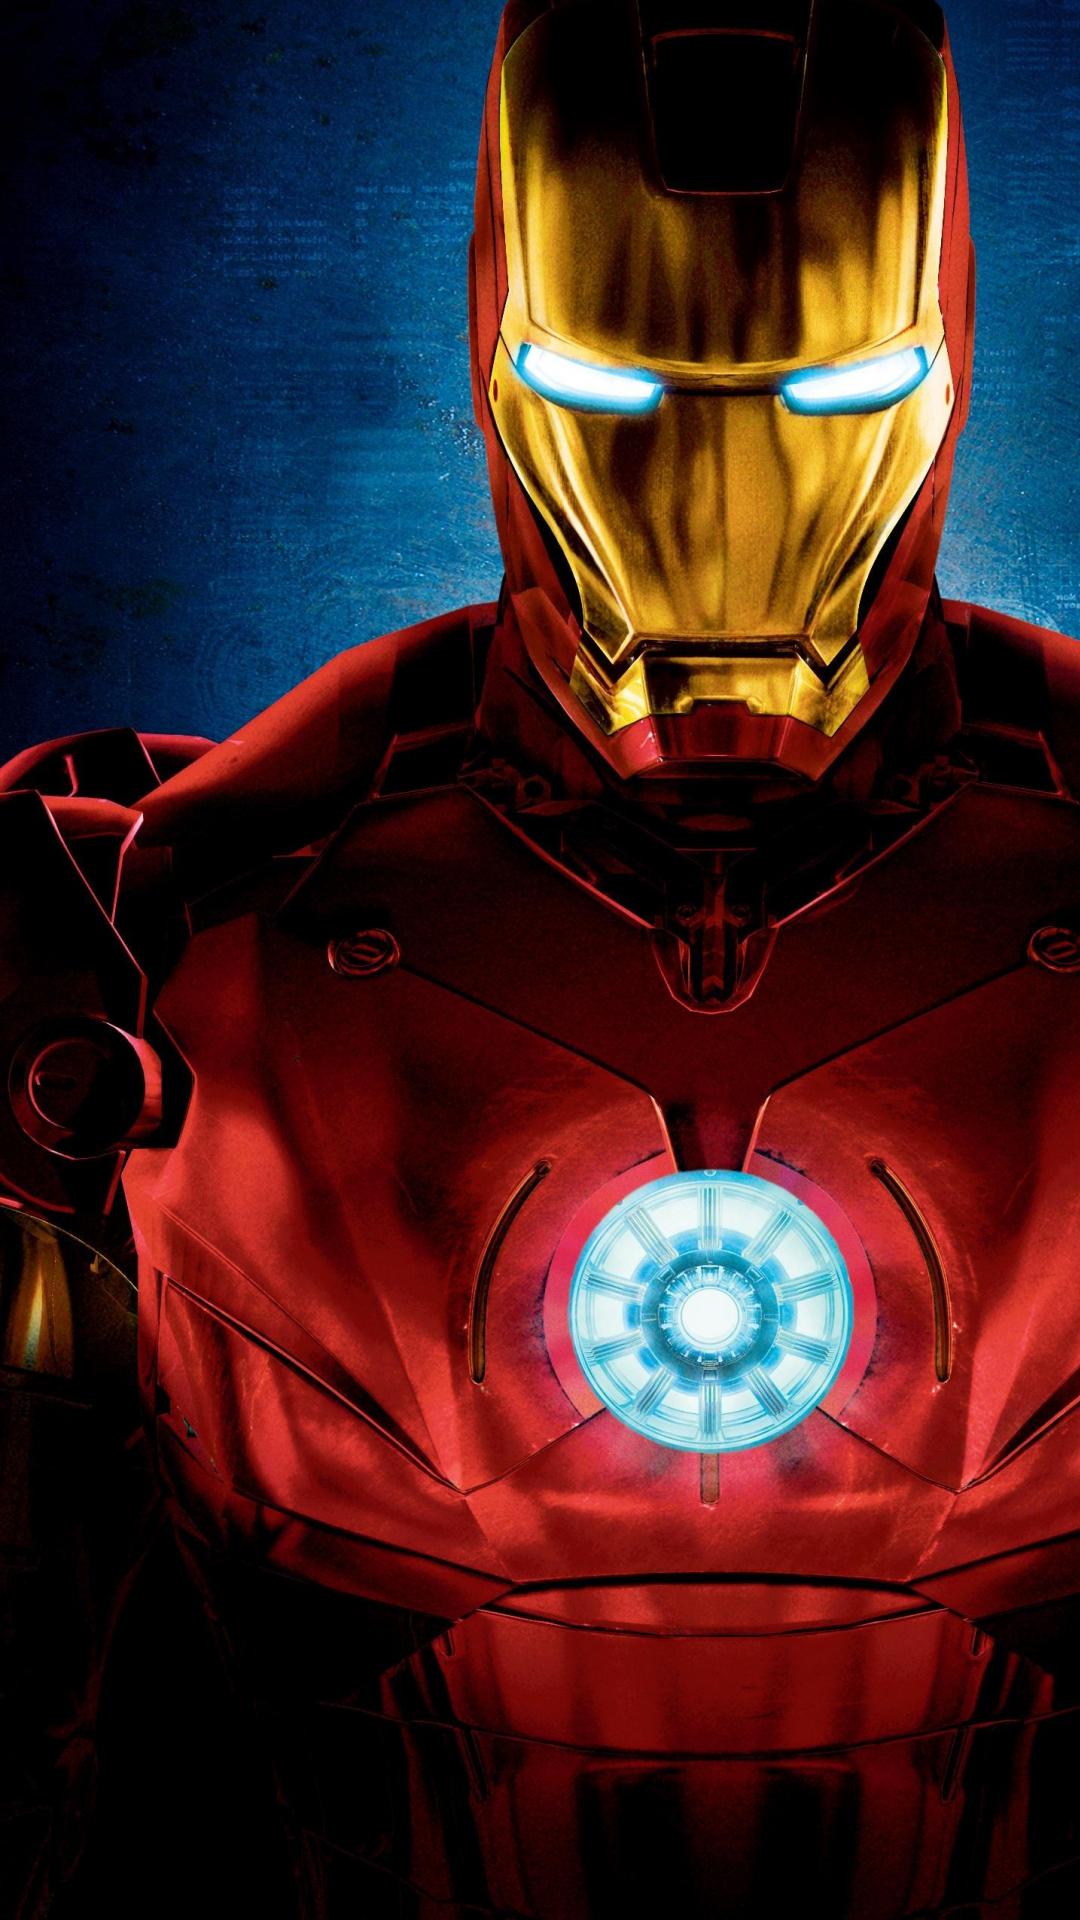 Iron man armor artwork marvel comics wallpaper 20517